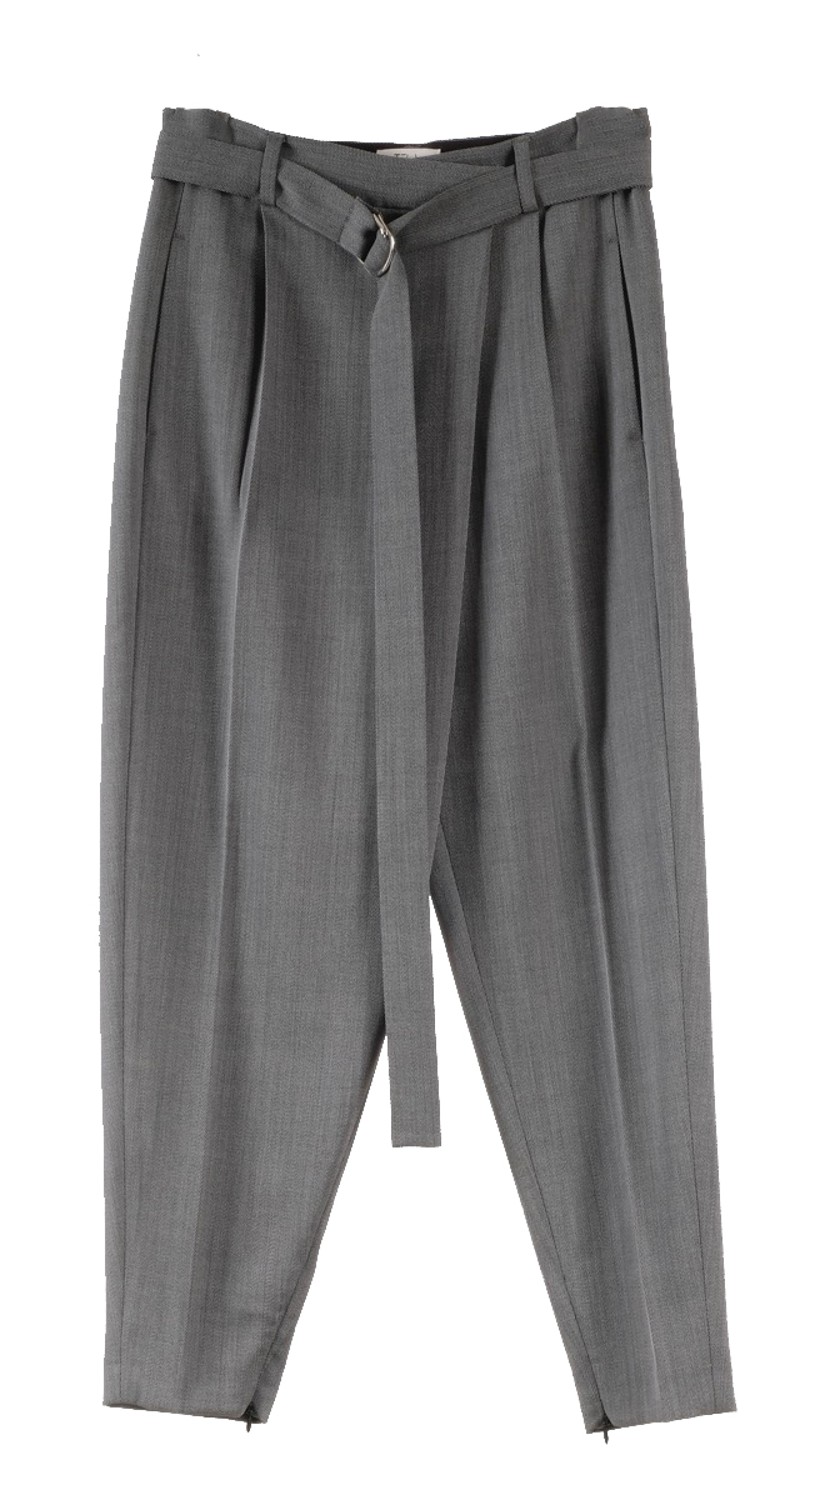 shop Tela Sales Pantaloni: Pantaloni Tela, vita alta, cintura in vita, pence davanti, stretto infondo, tasche laterali.

Composizione: 100%  lana. number 1930